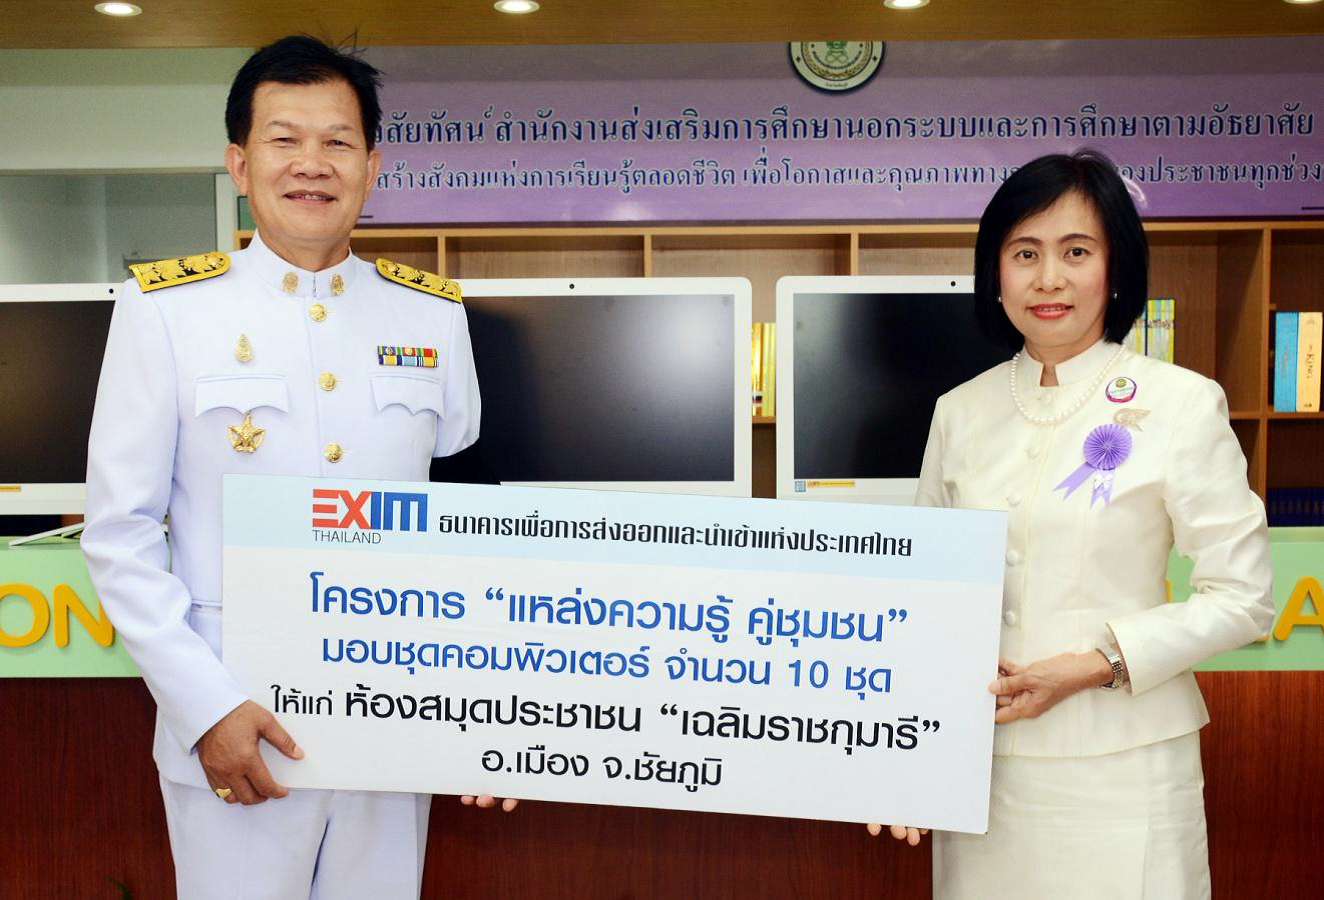 EXIM Thailand Donates Computers to “Chalerm Rajakumari” Public Library in Chaiyaphum